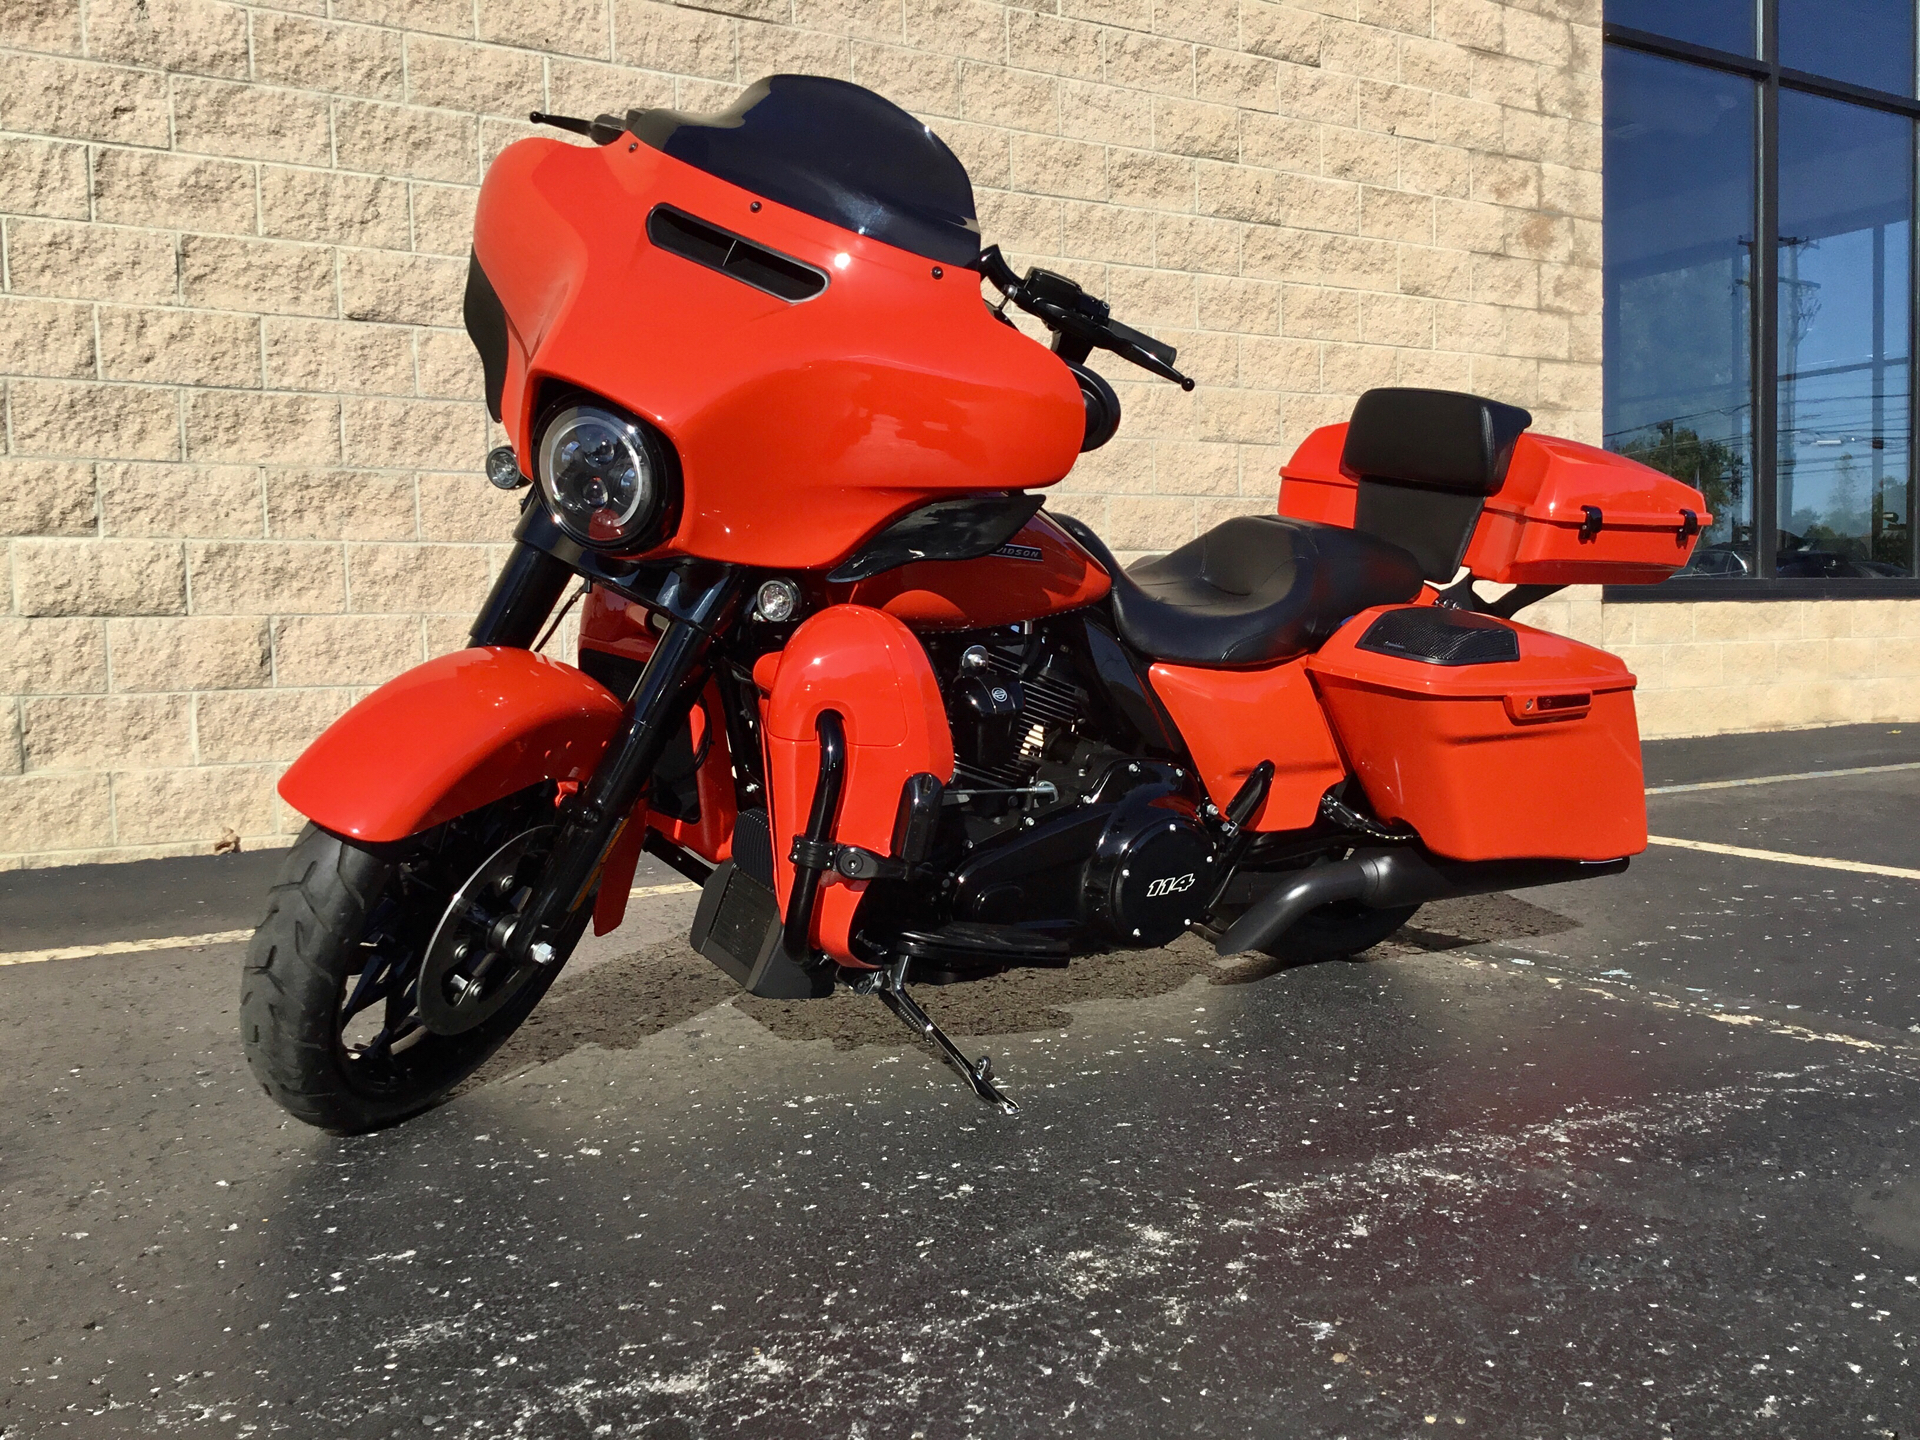 2020 Harley-Davidson Street Glide® Special in Monroe, Michigan - Photo 1